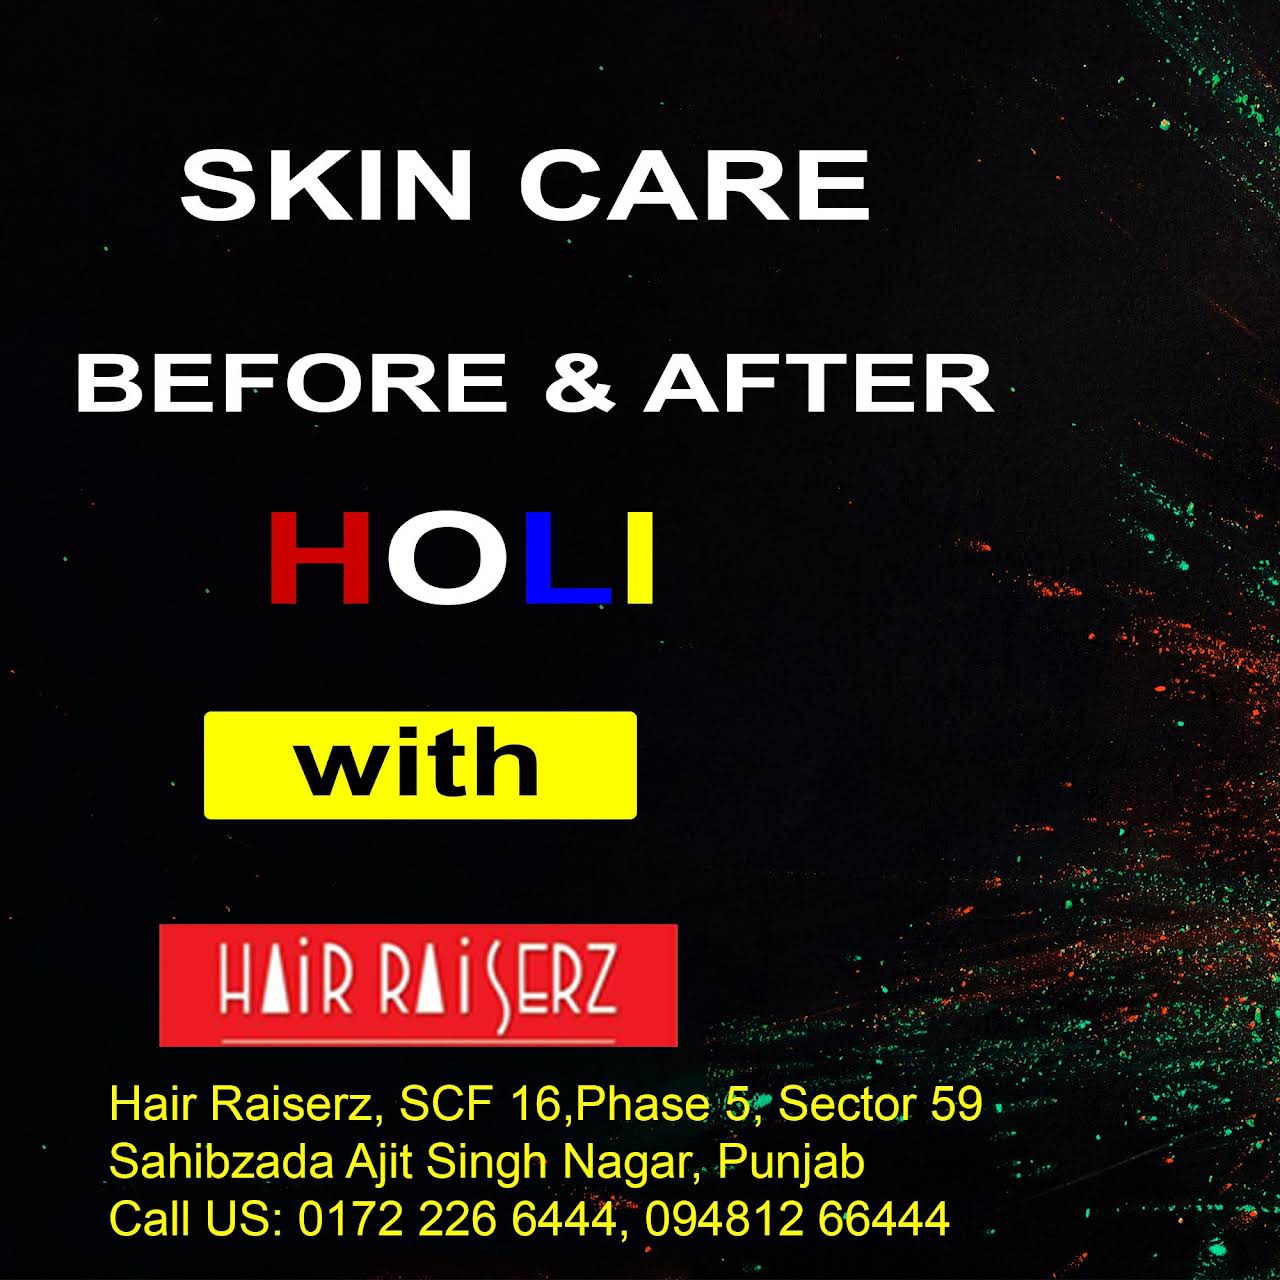 Phase 5 Mohali (HAIR RAISERZ) - Nail Salon in Sector 59